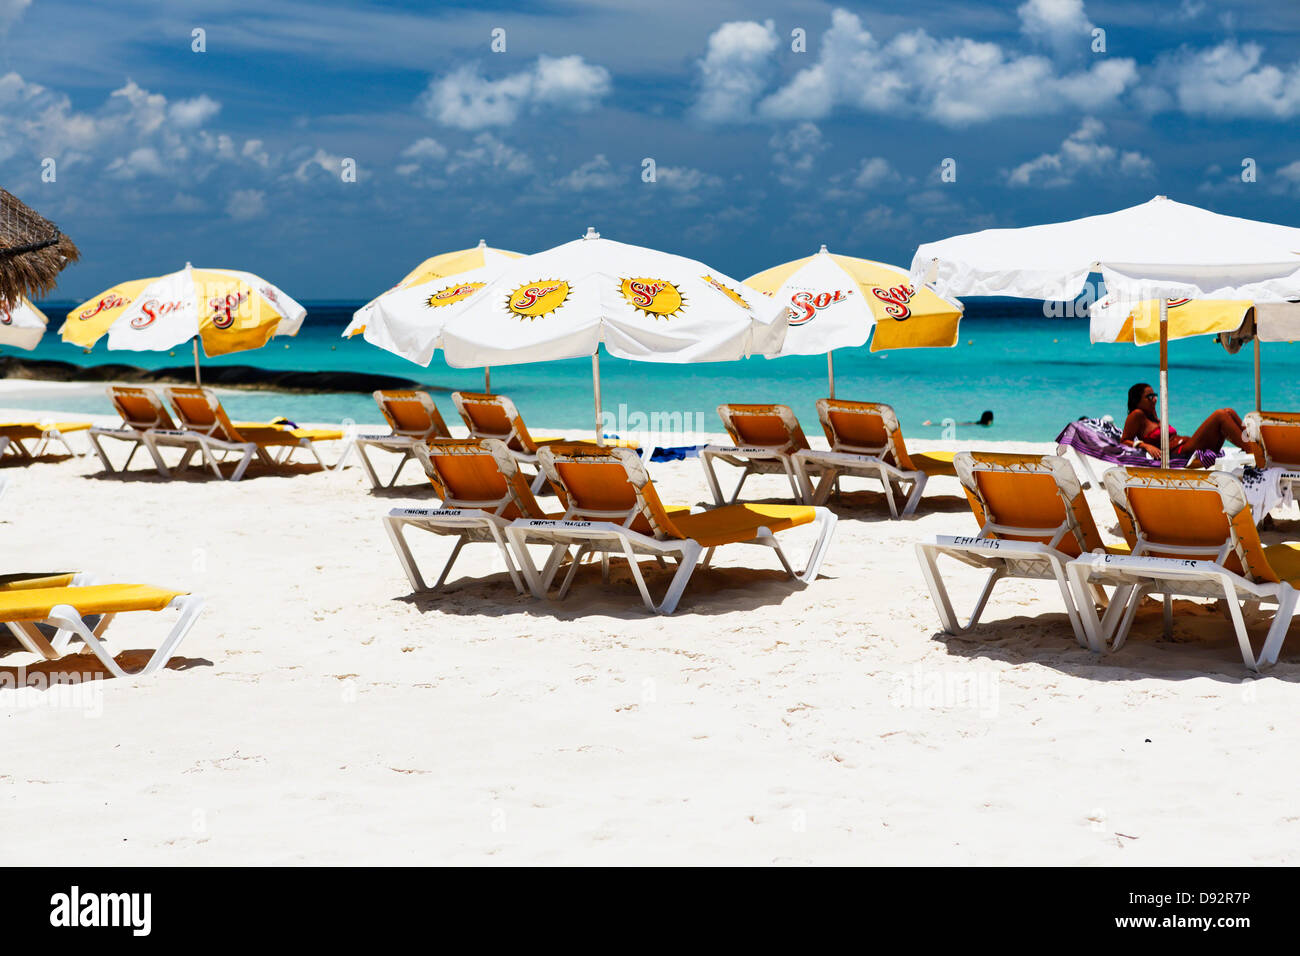 Lounge Chairs and Beach Umbrellas on a Beach, Playa Norte, Isla Mujeres, Mexico Stock Photo